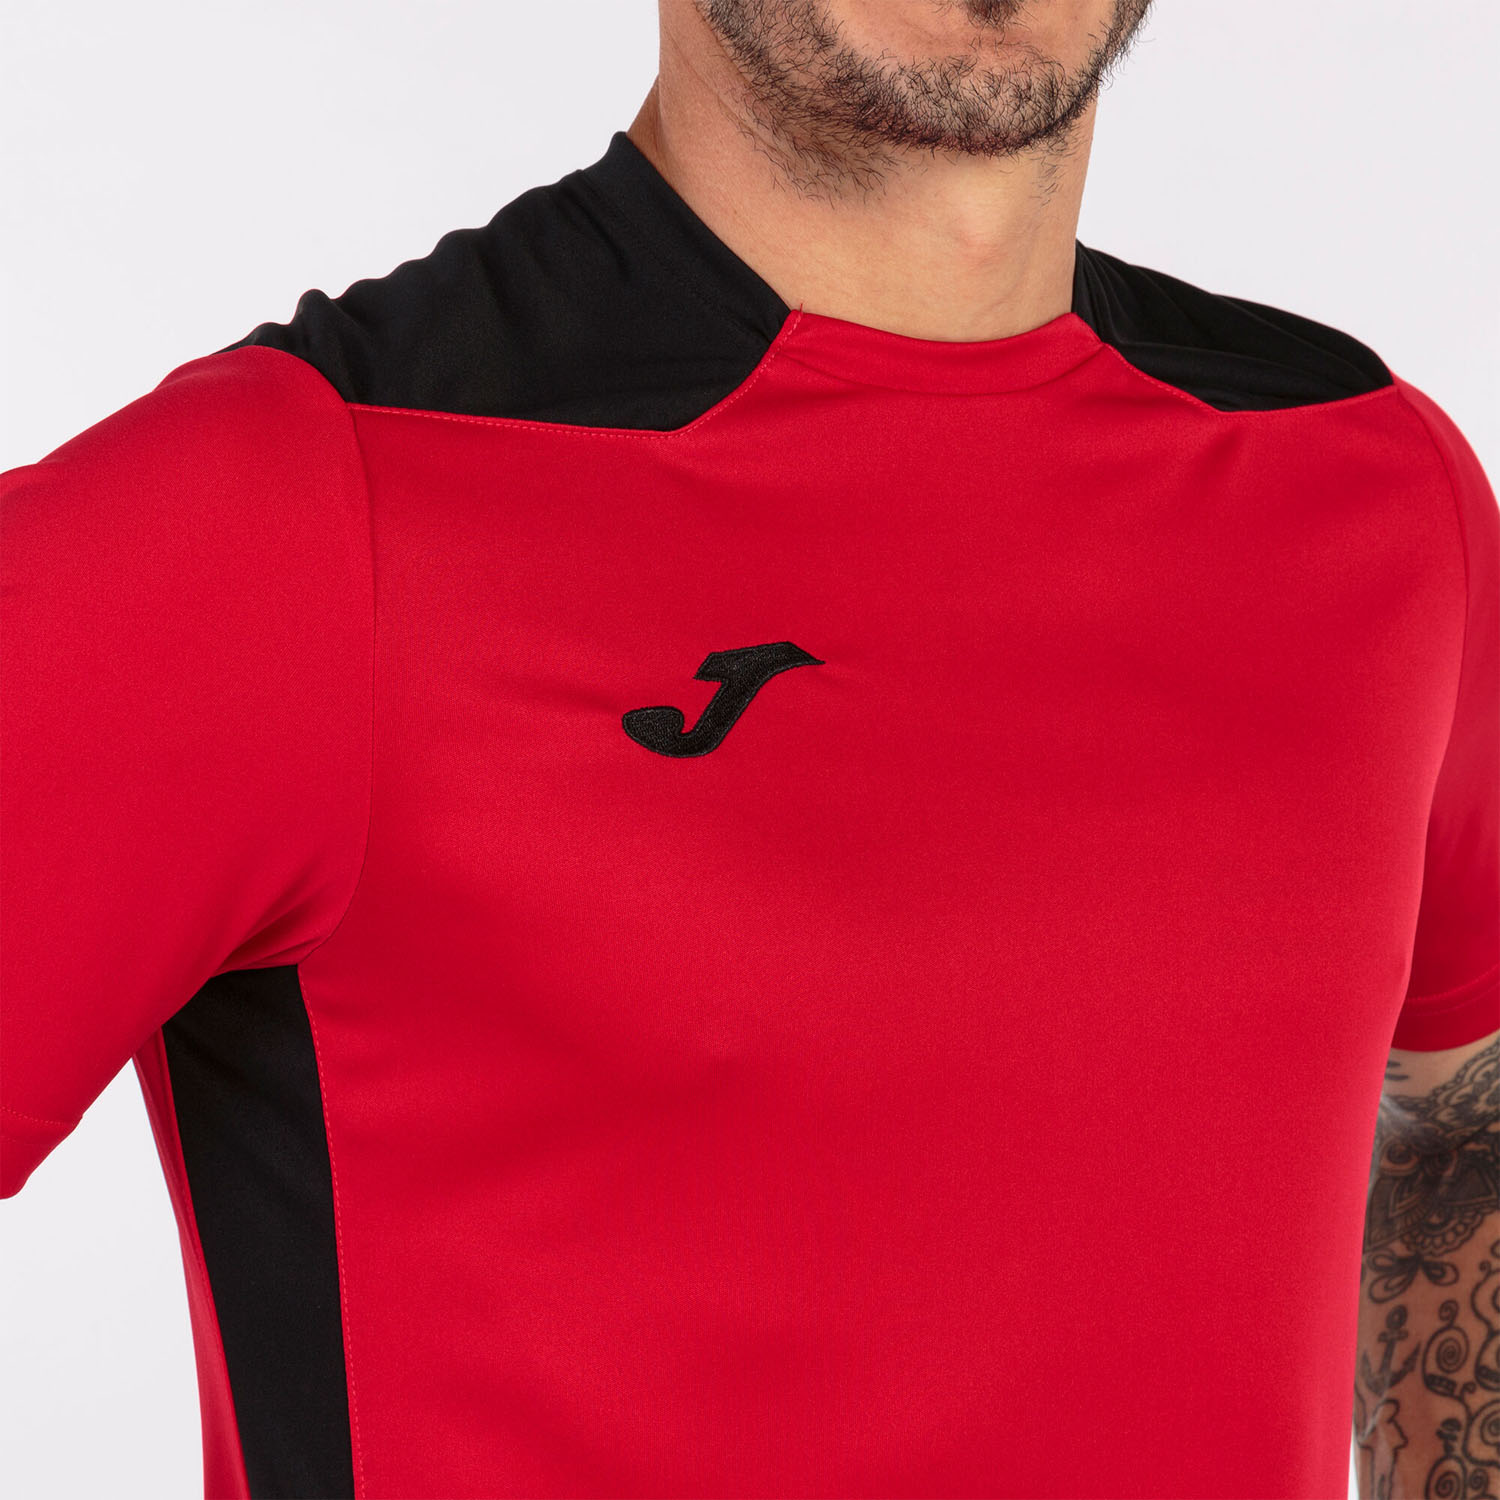 Joma Championship VI T-Shirt - Red/Black